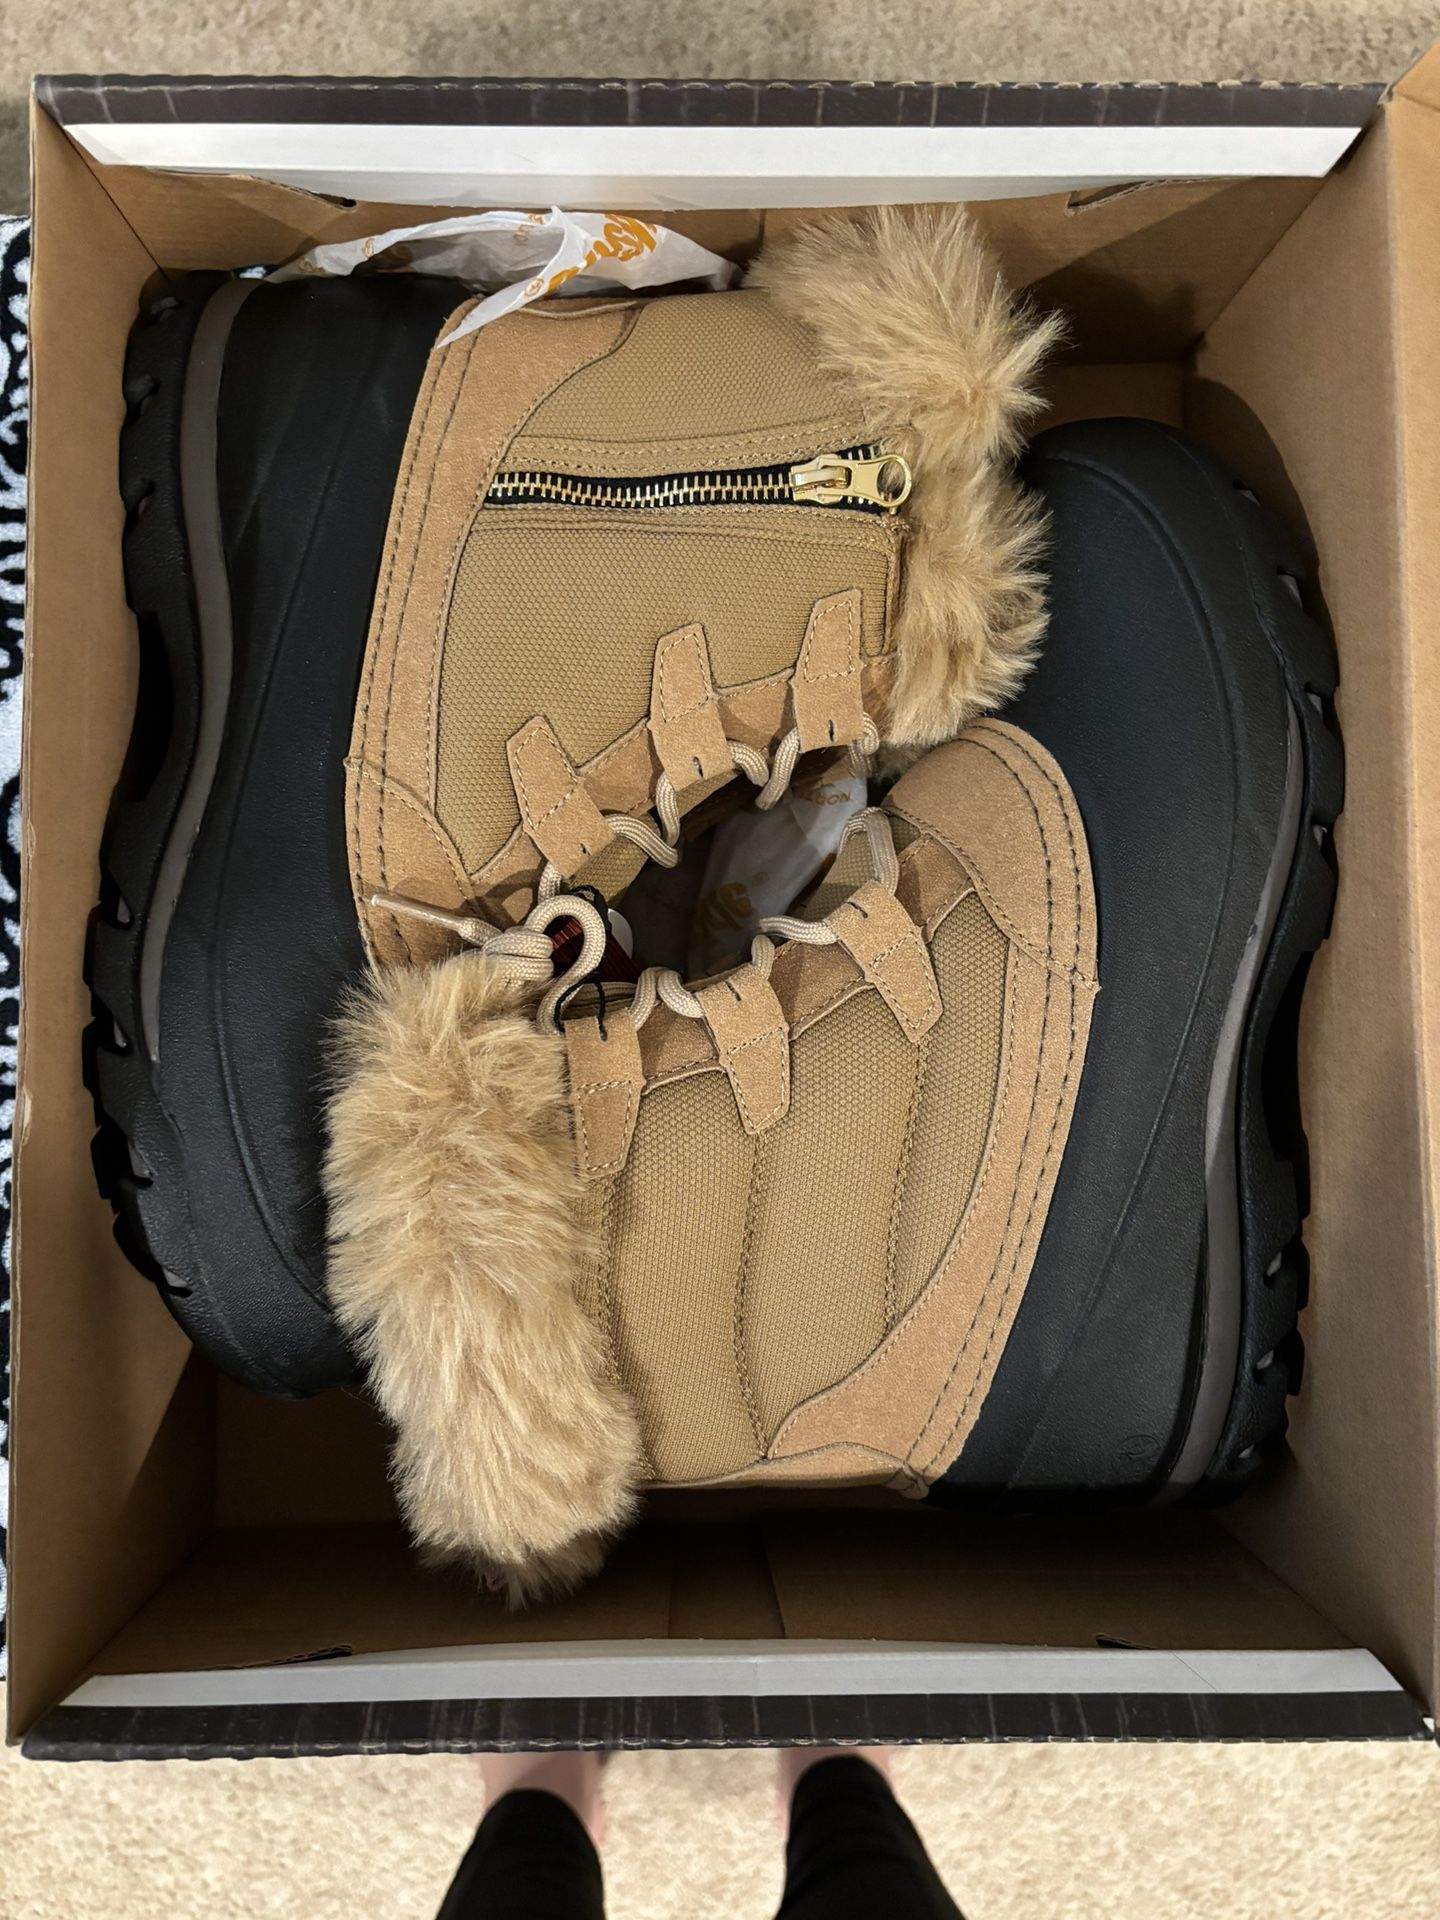 Snow Boots 